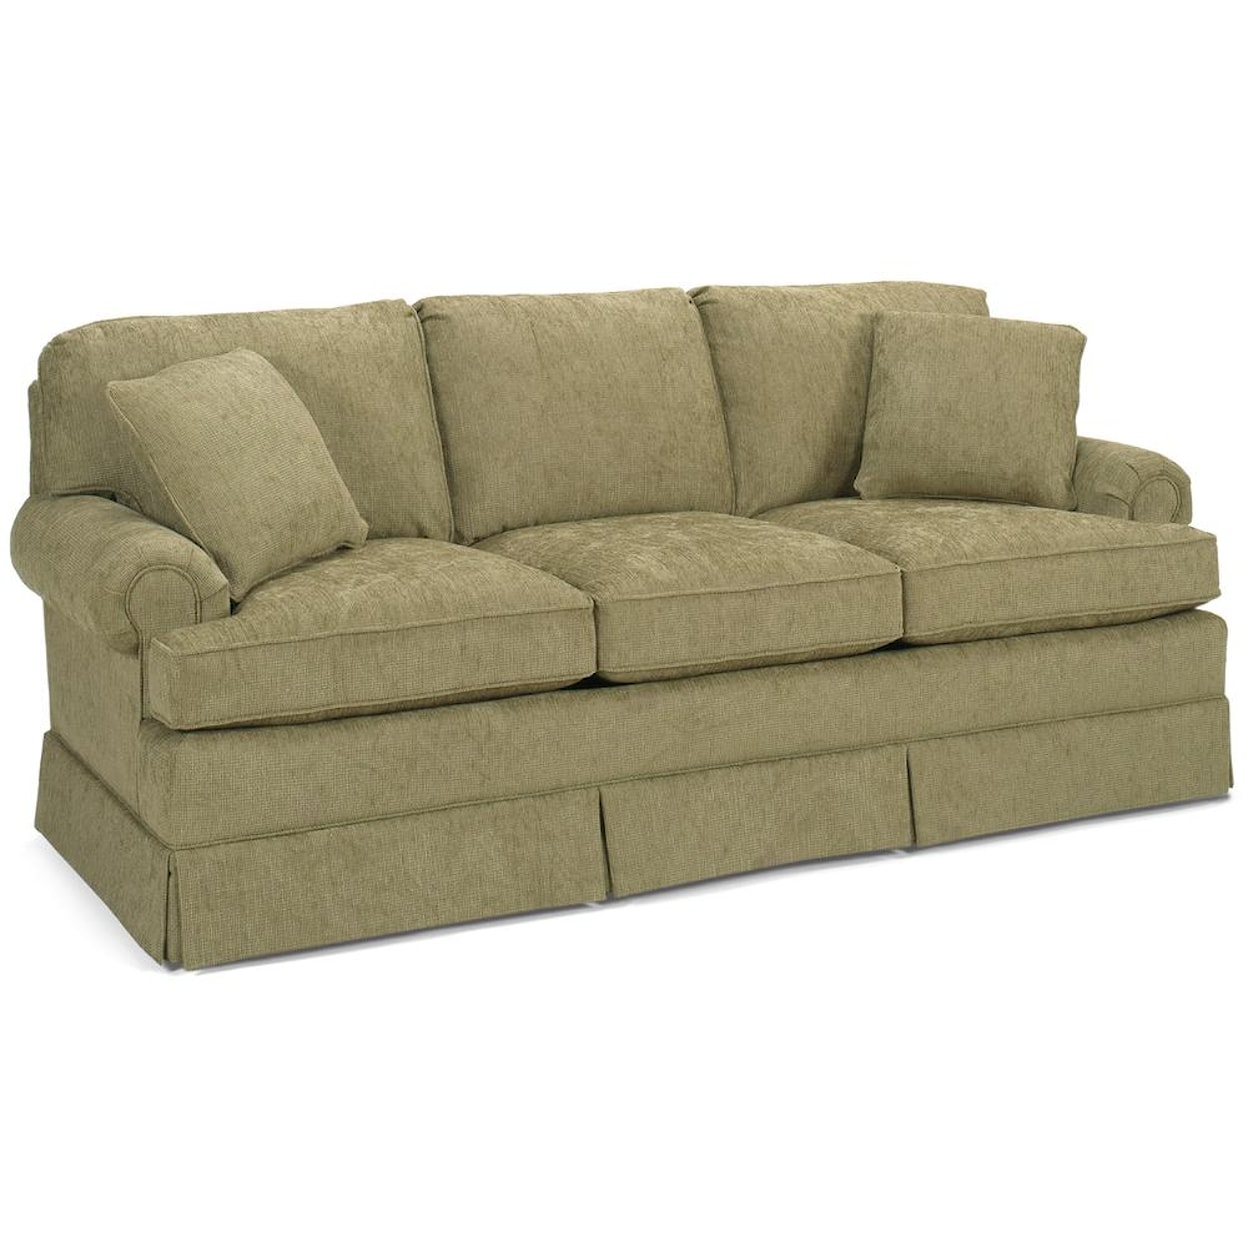 Temple Furniture America Upholstered Sofa